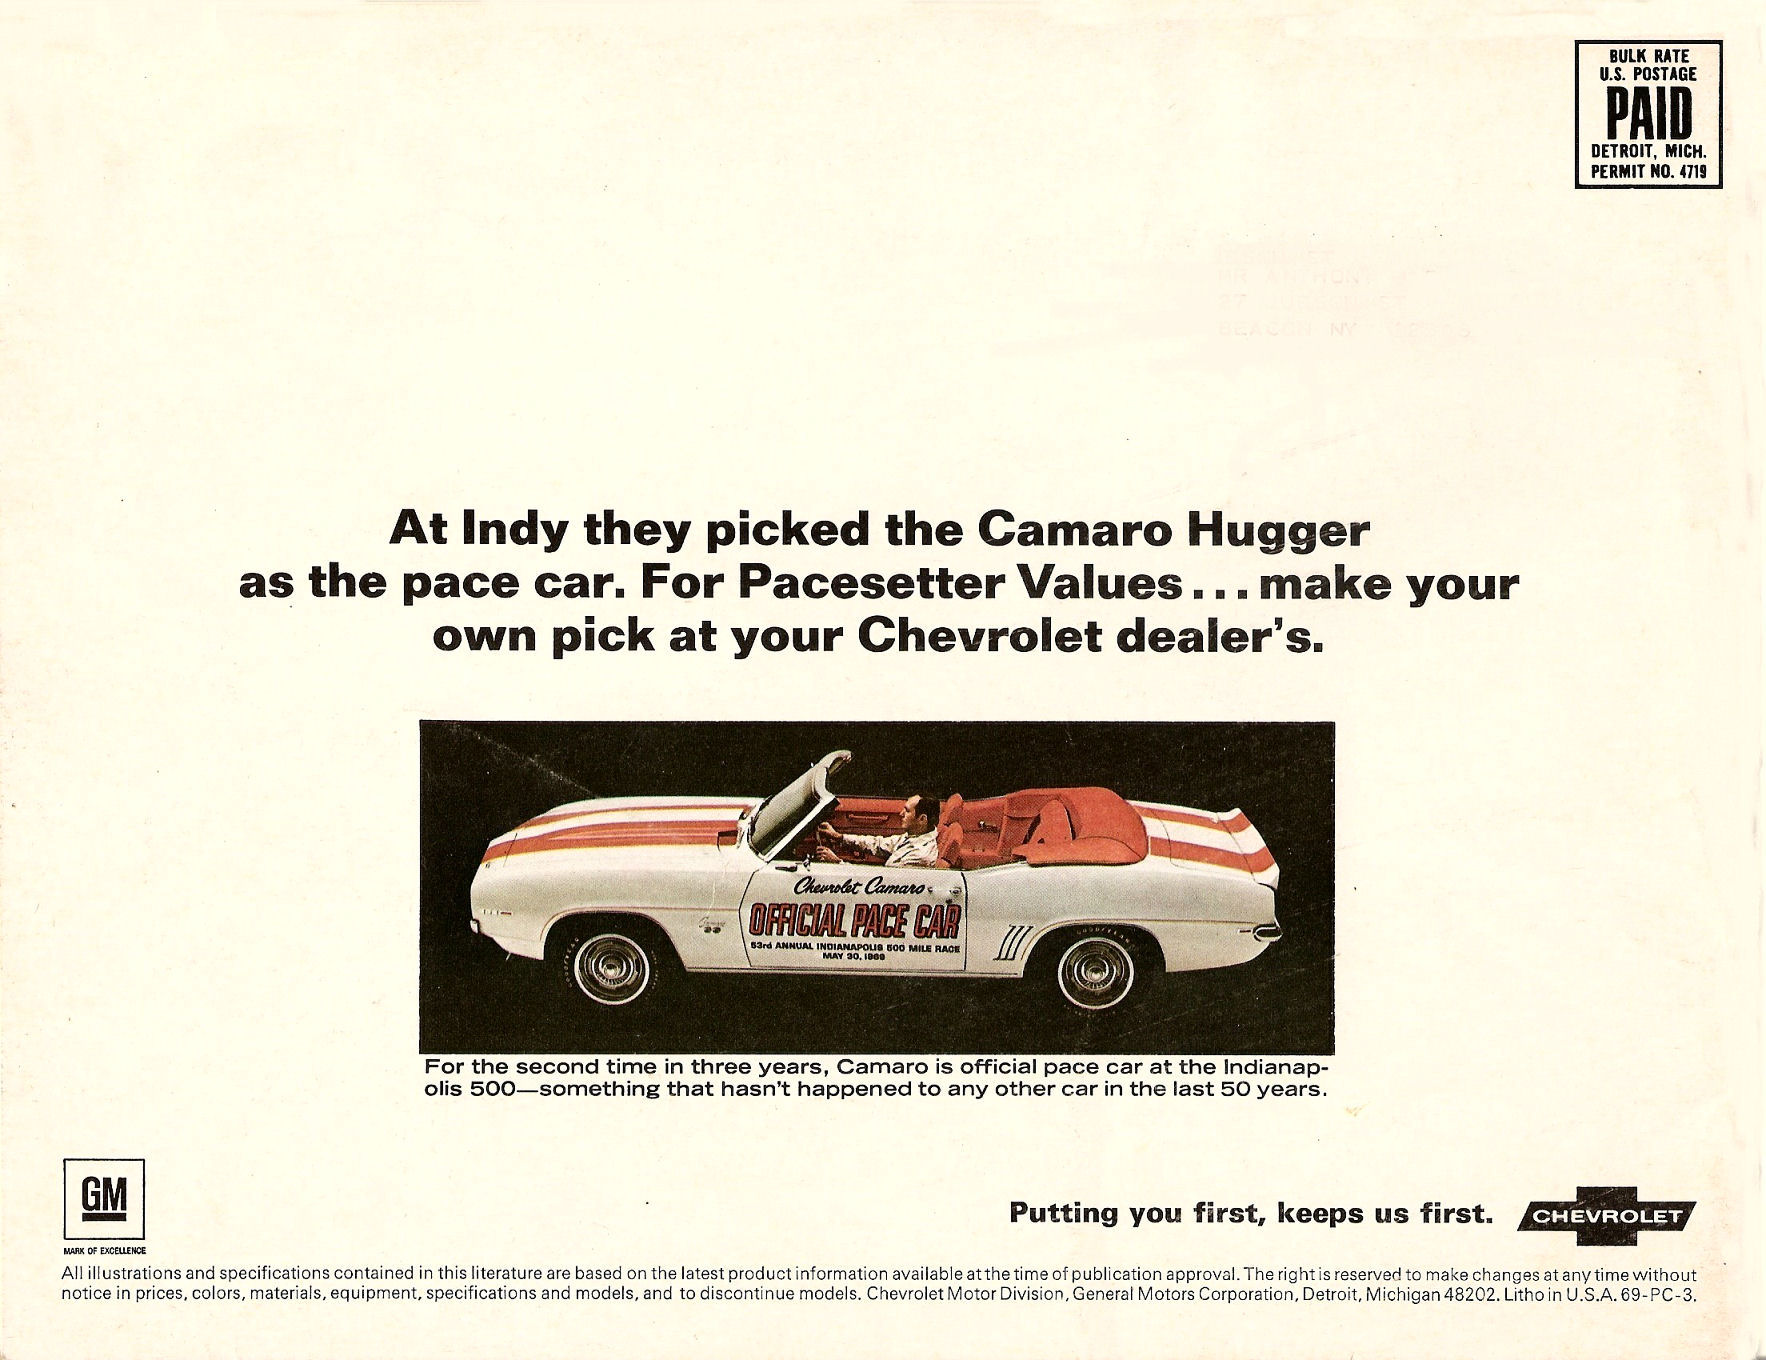 1969_Chevrolet_Pacesetter_Values_Mailer-16